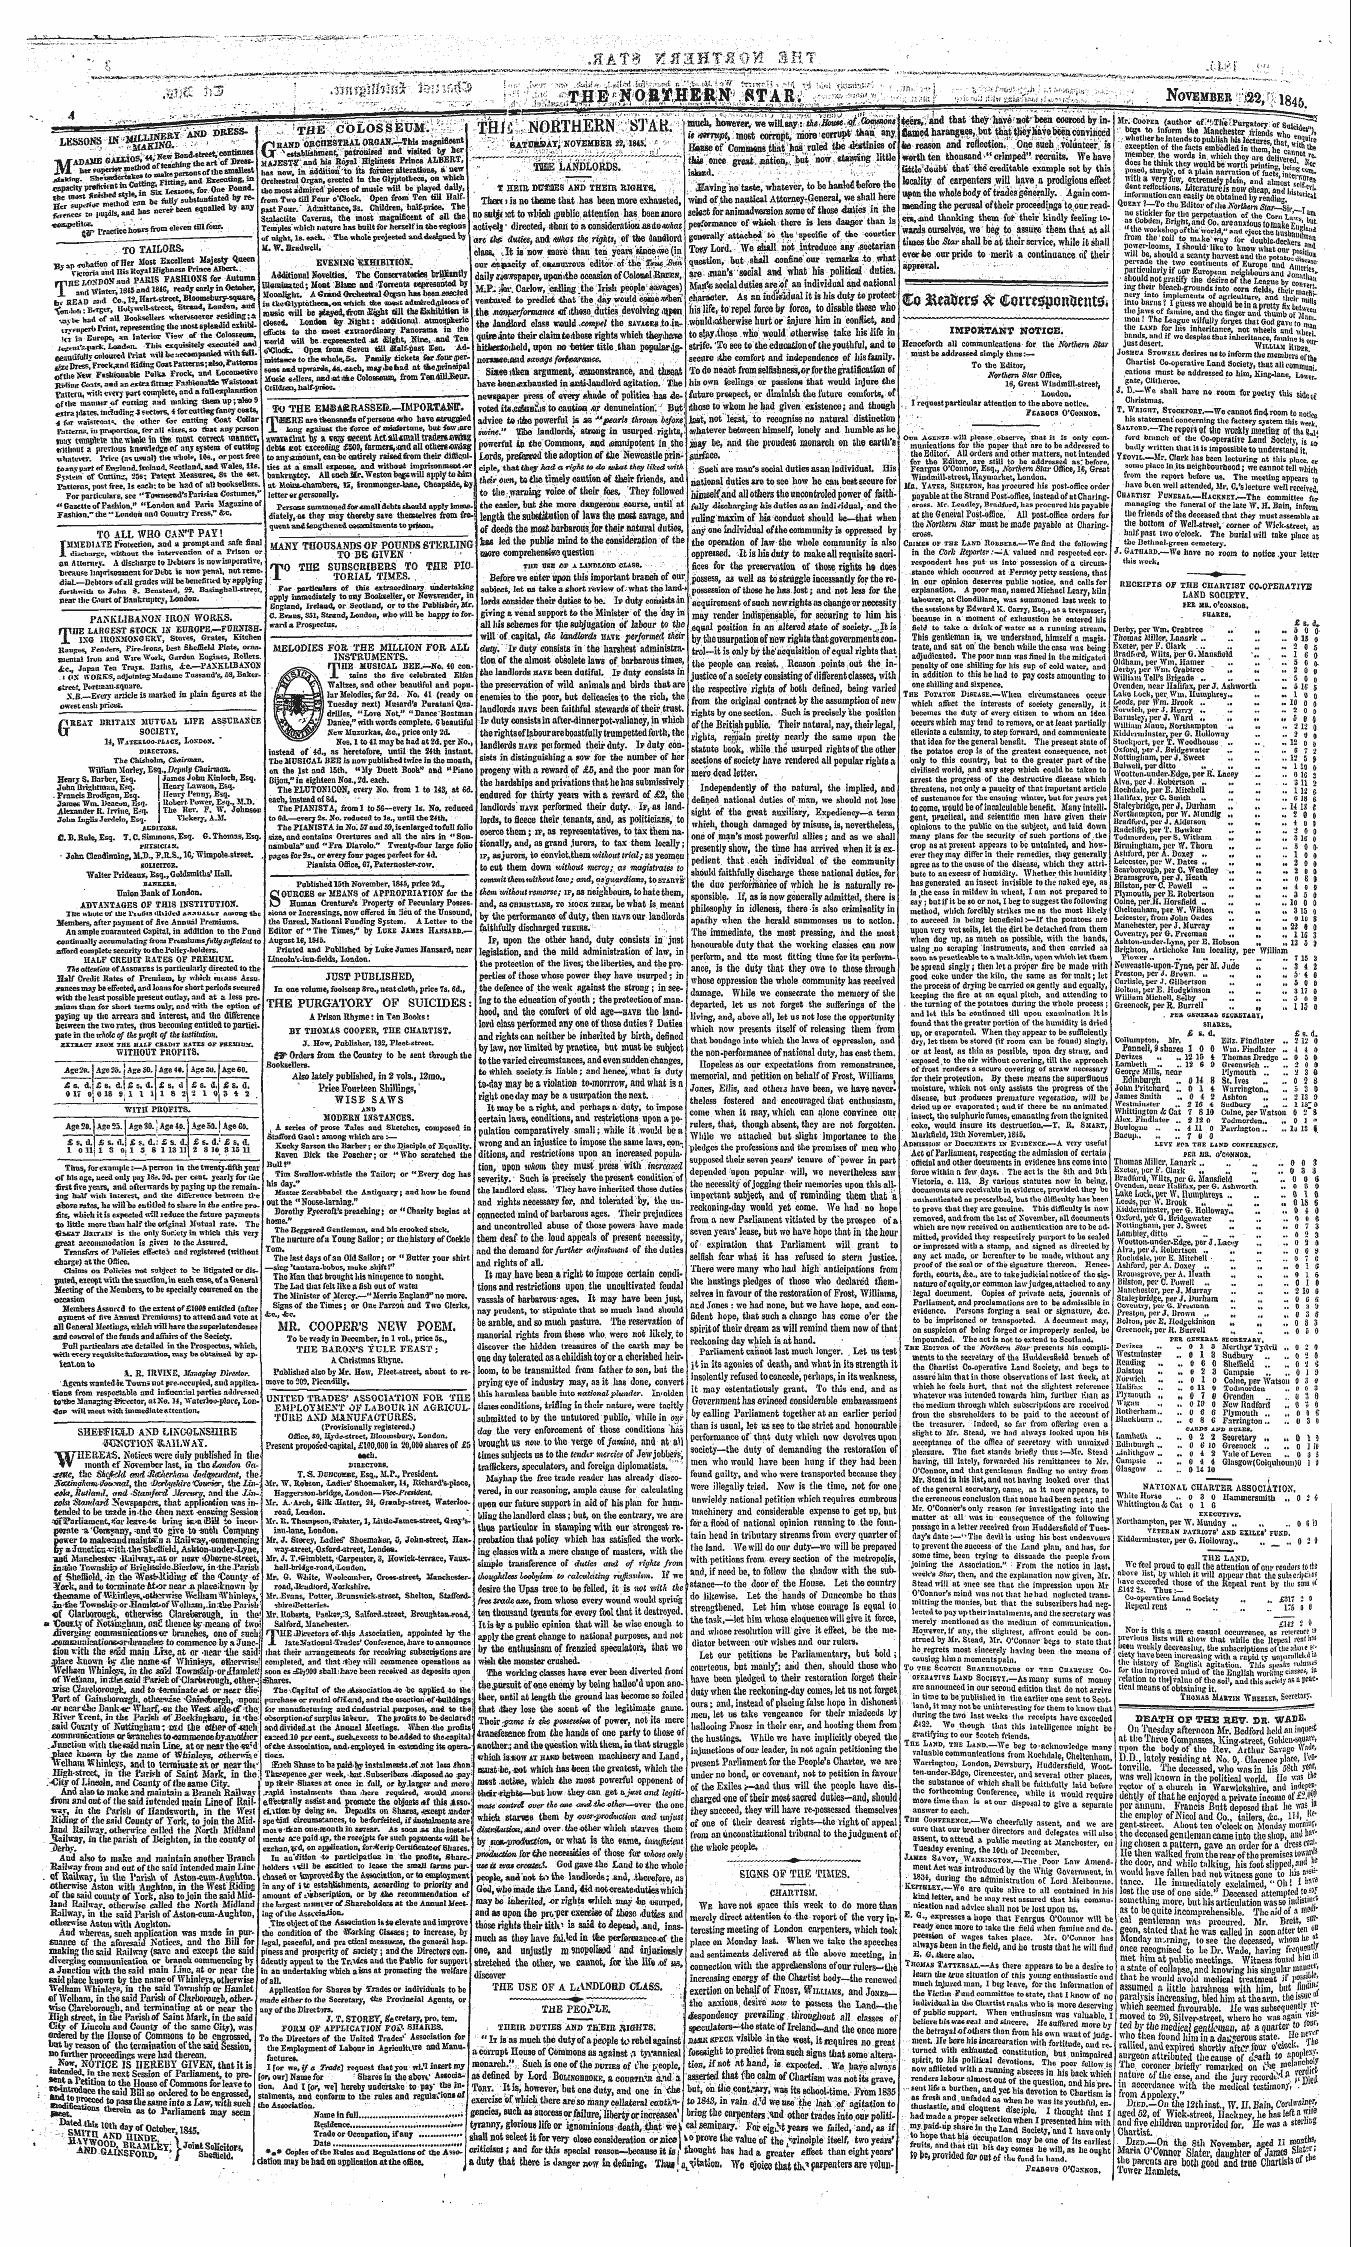 Northern Star (1837-1852): jS F Y, 3rd edition - At Tbe'lliree Compasses, King-Street, Go...